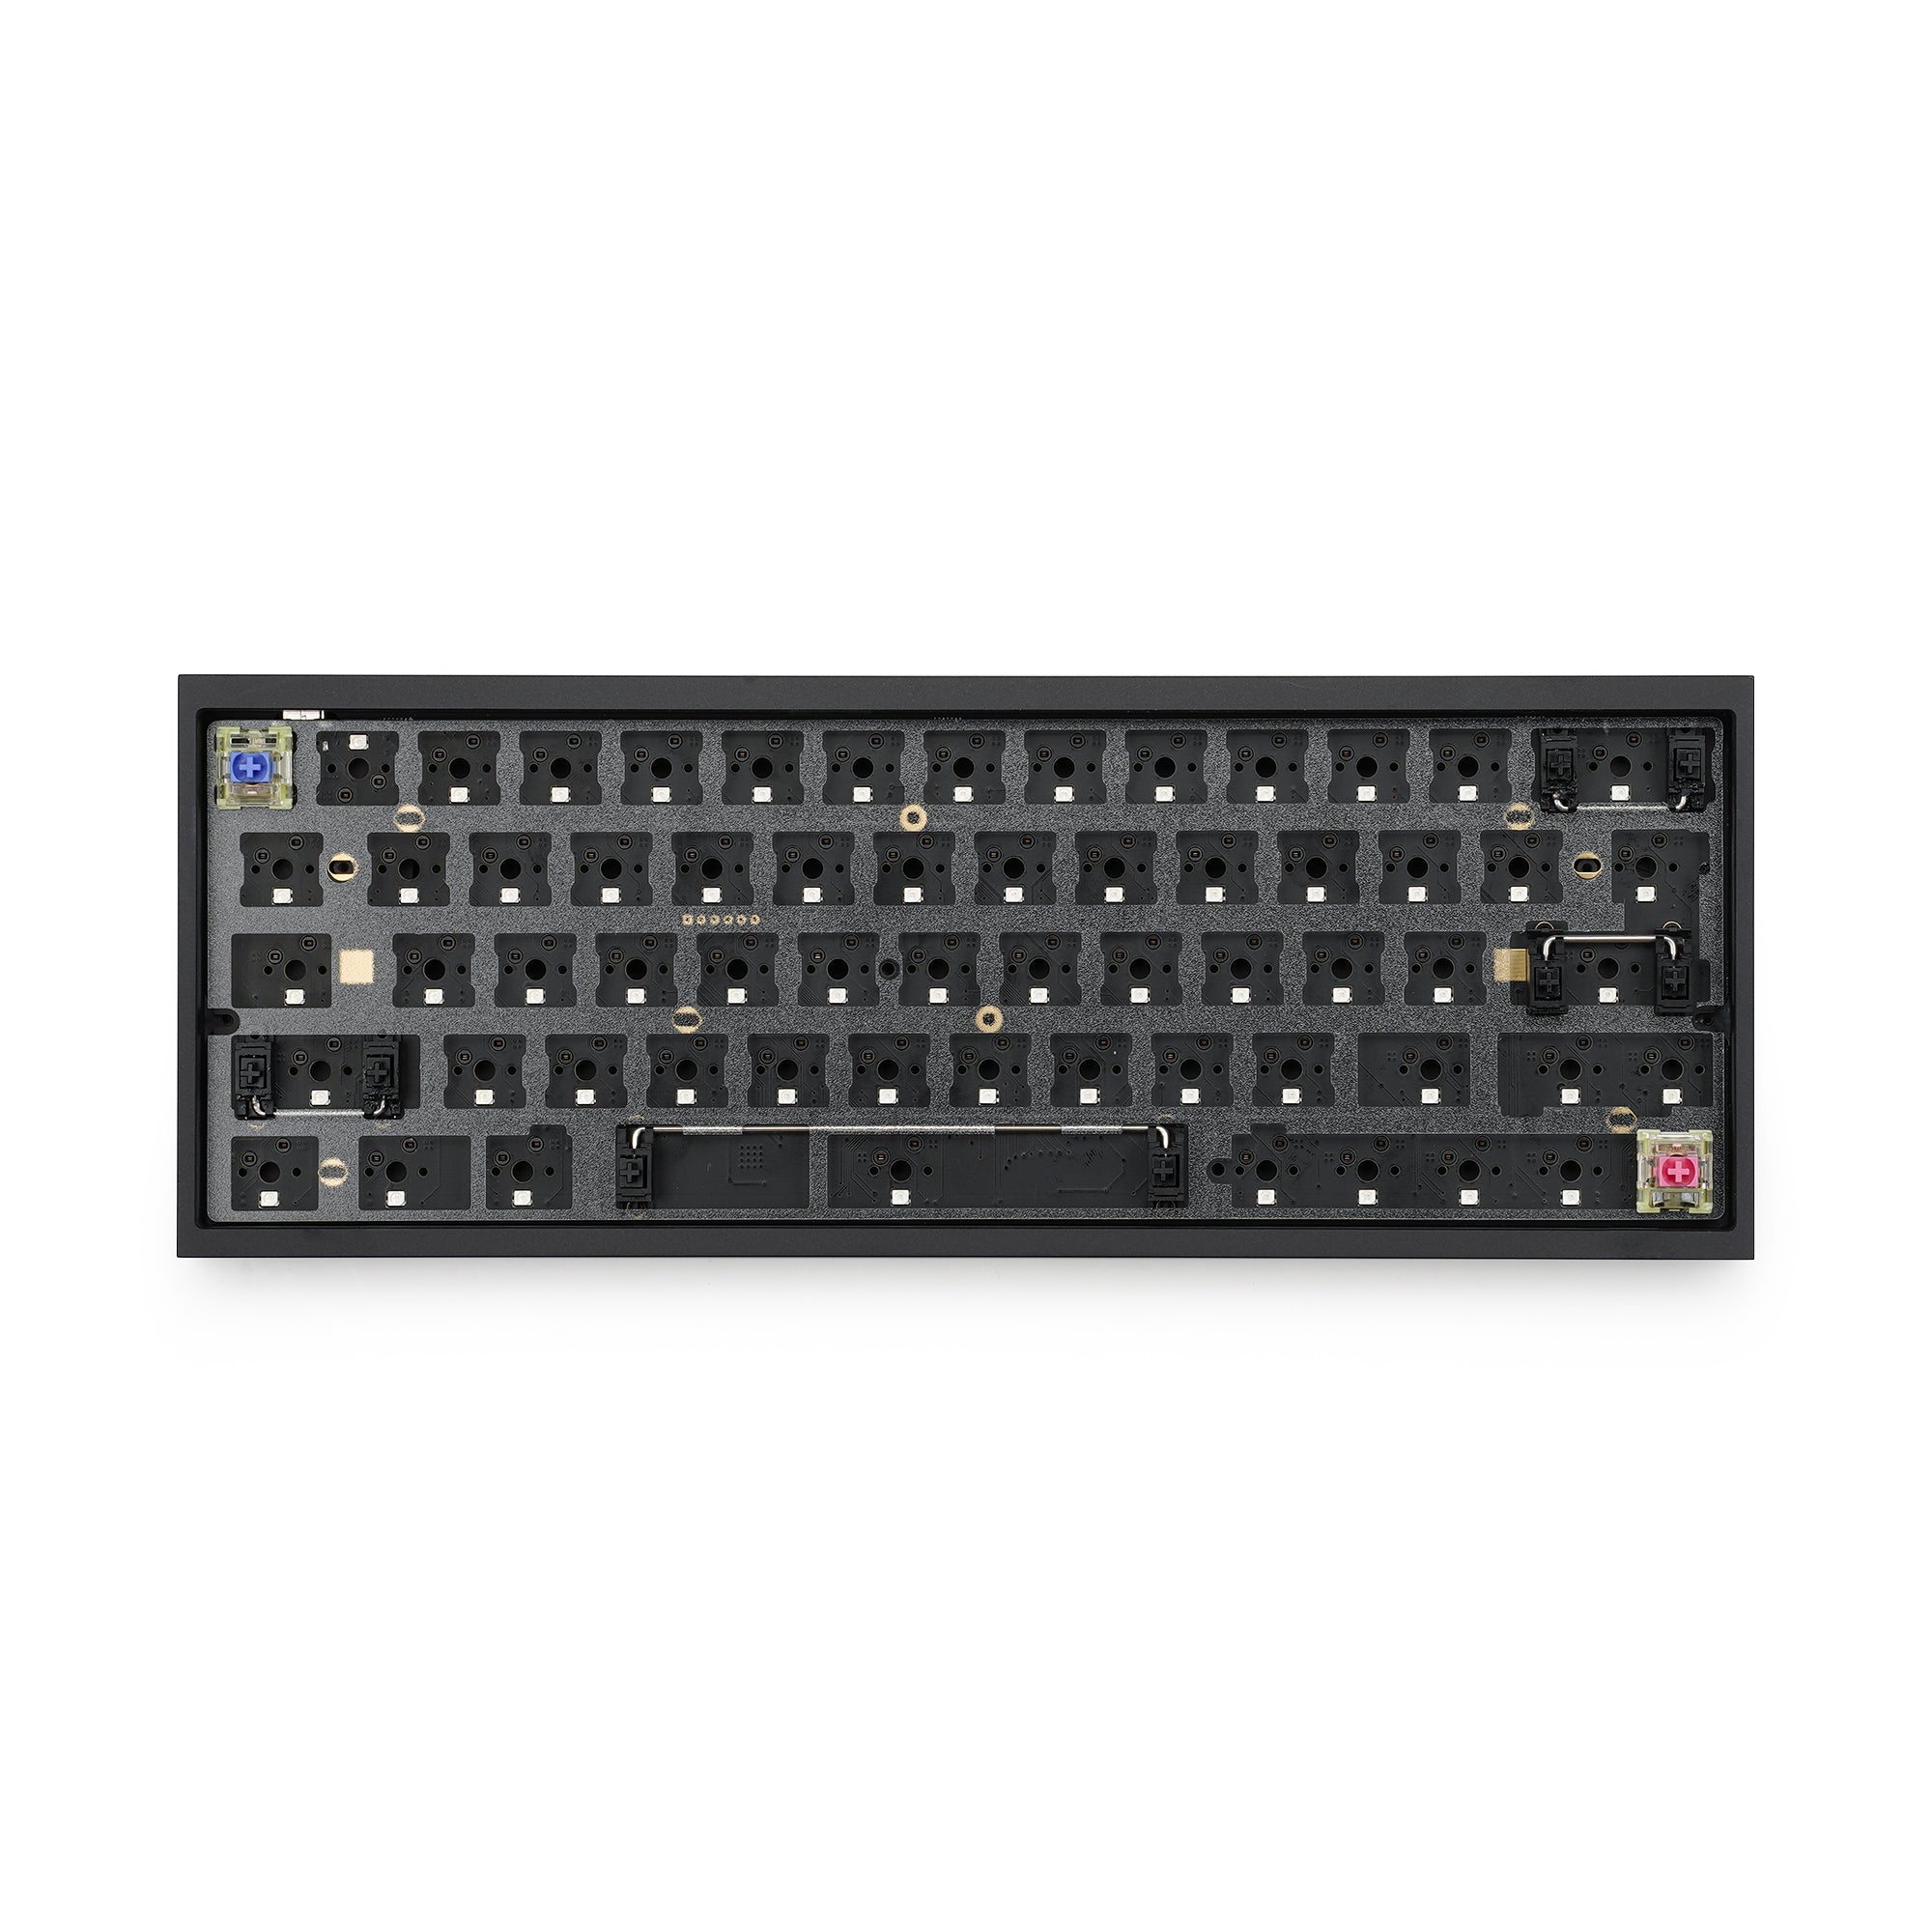 Tofu60 DZ60RGB V2 Hot-swap Keyboard Kit